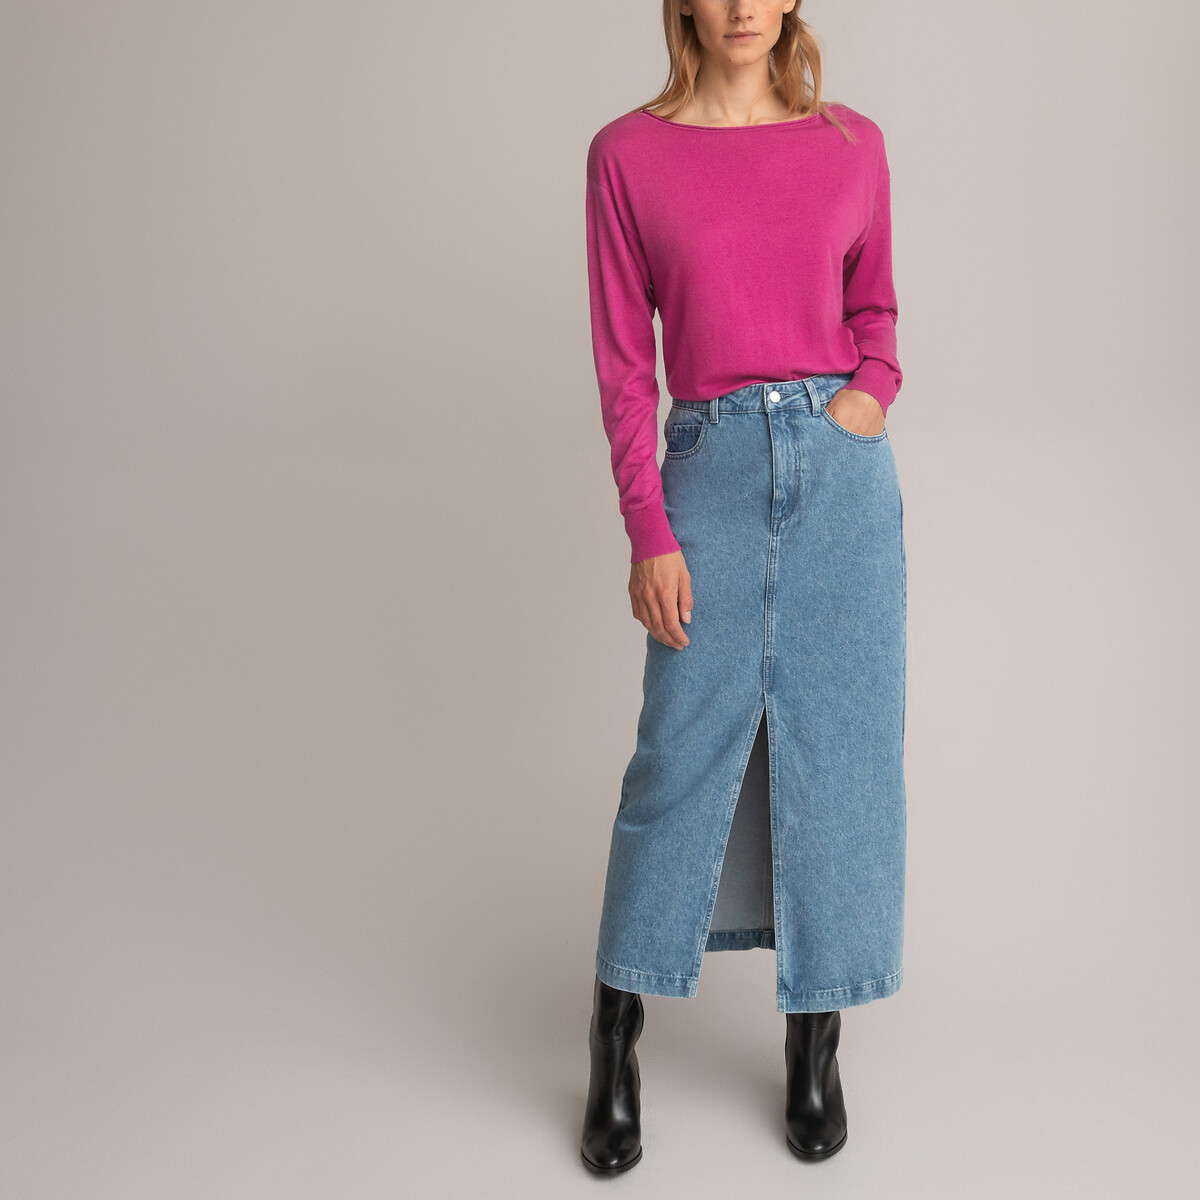 Пуловер С вырезом-лодочкой XS розовый LaRedoute, размер XS - фото 2